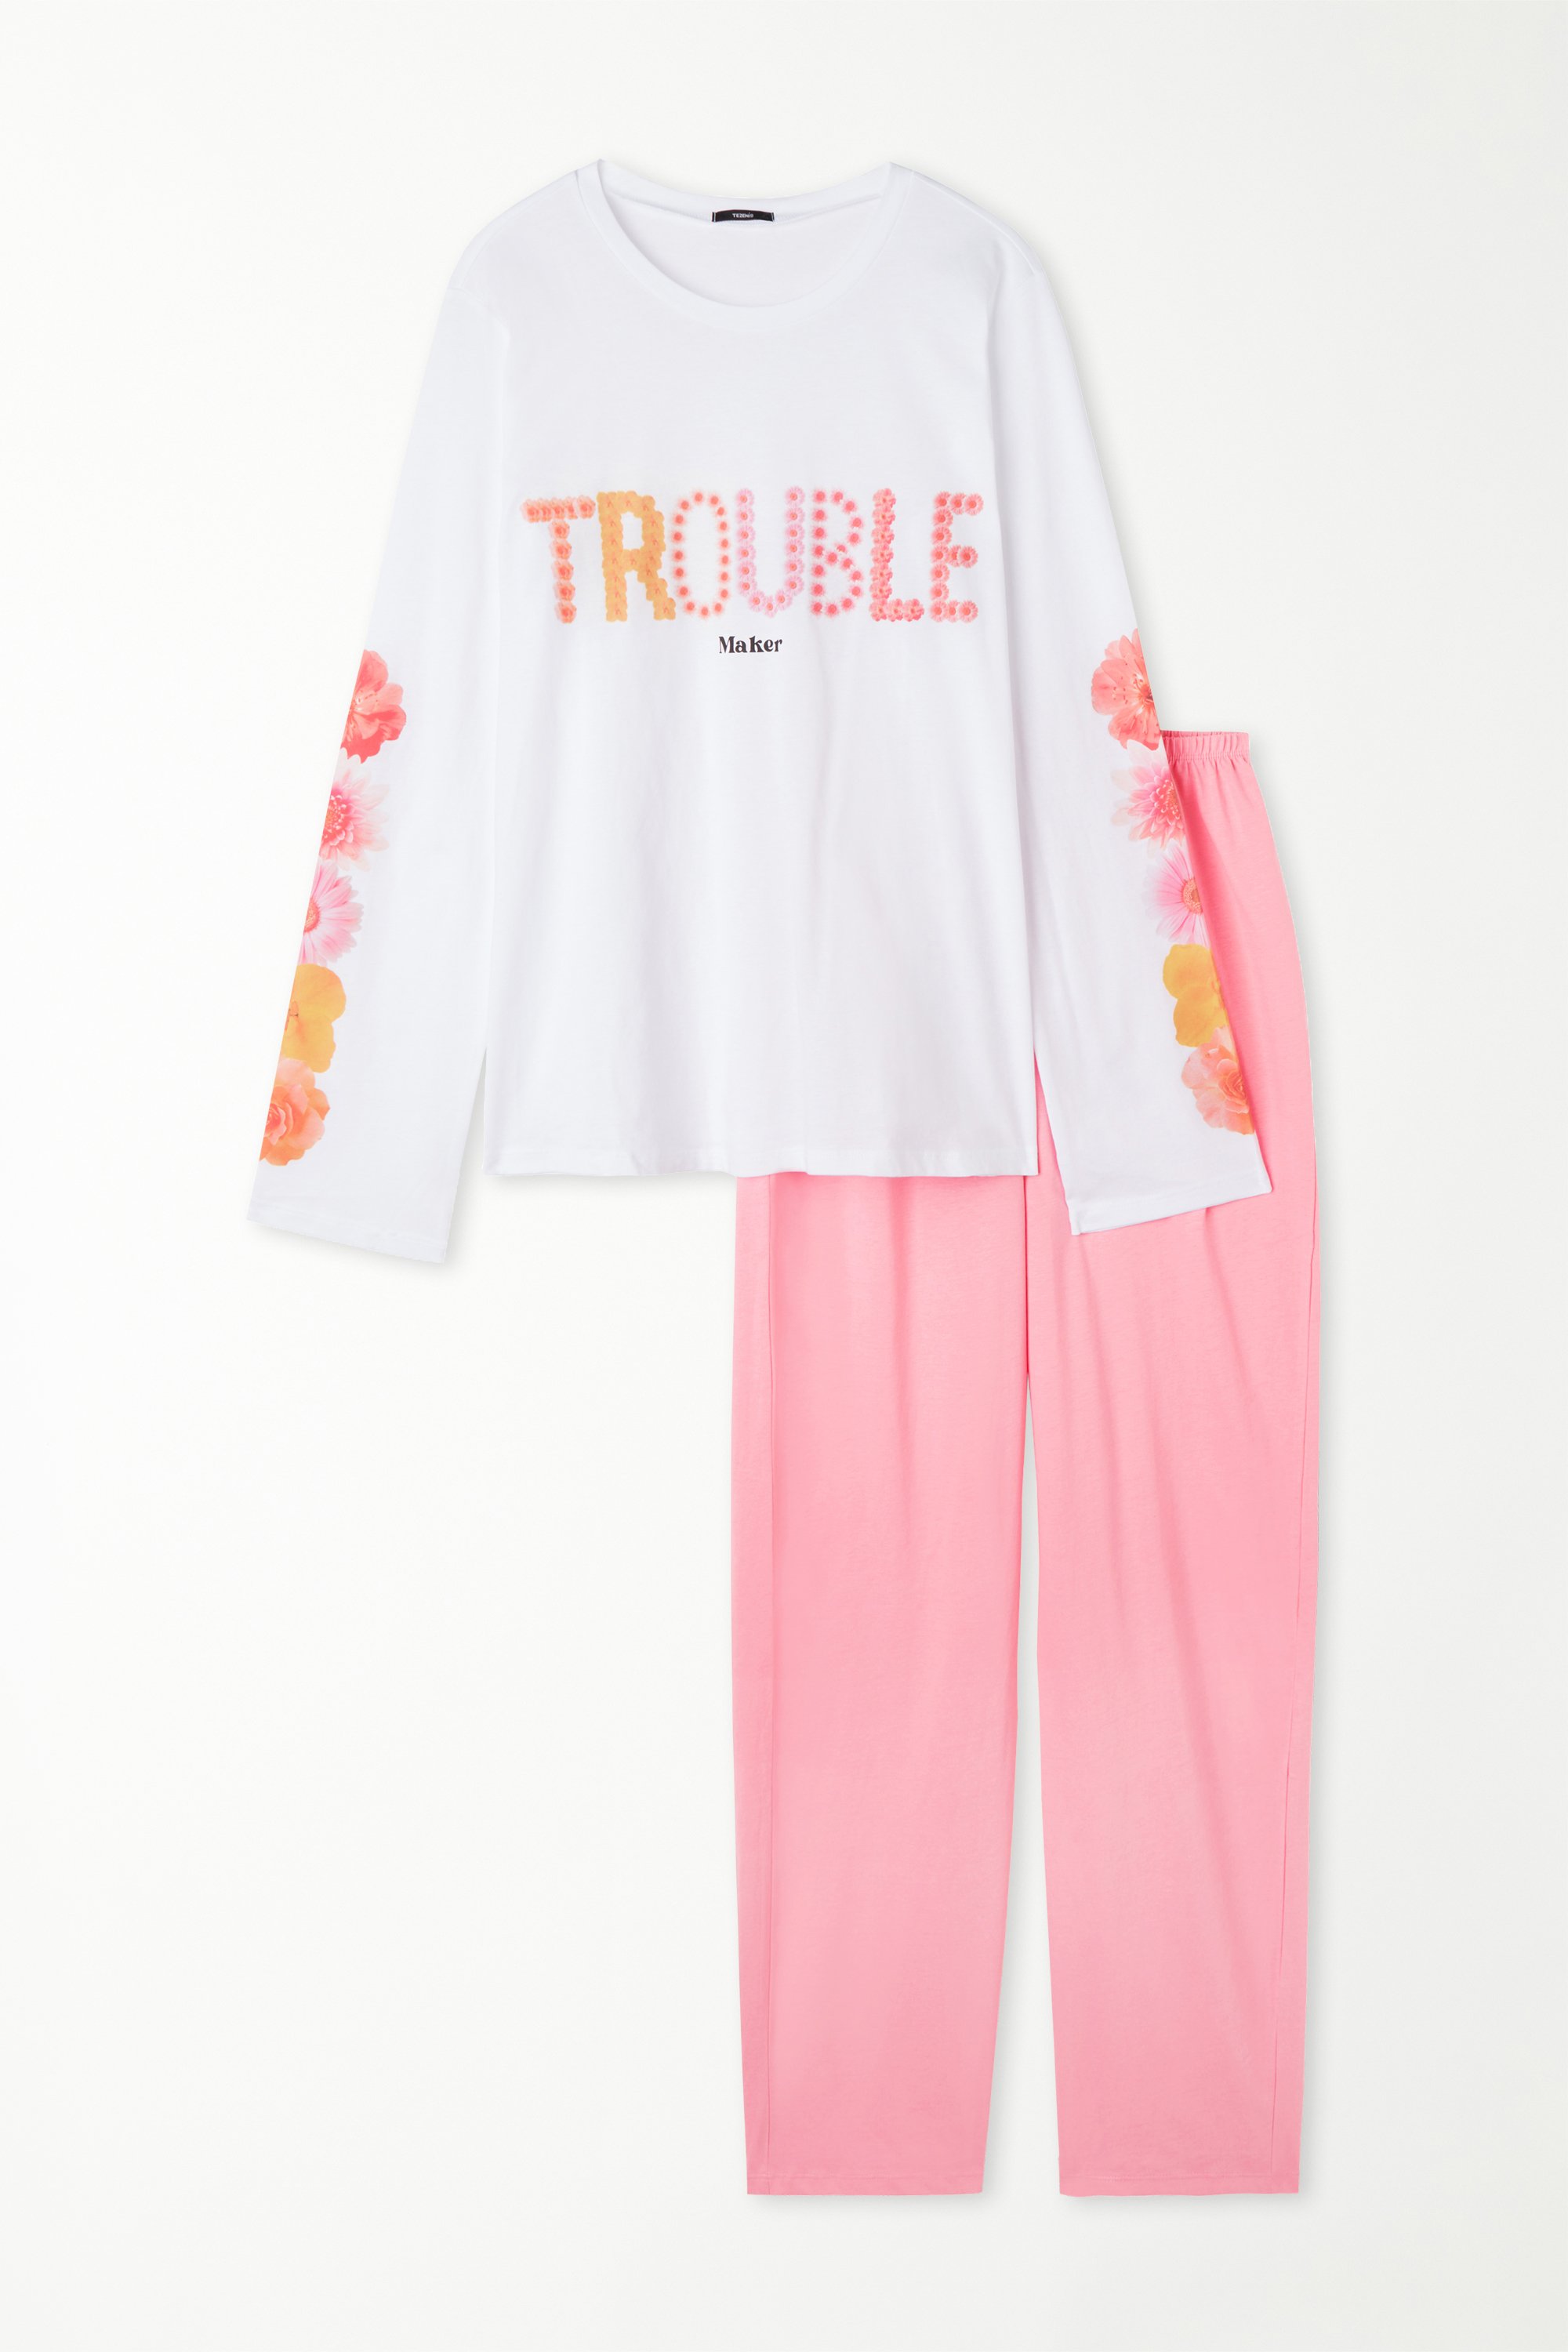 Trouble Print Full Length Cotton Pajamas